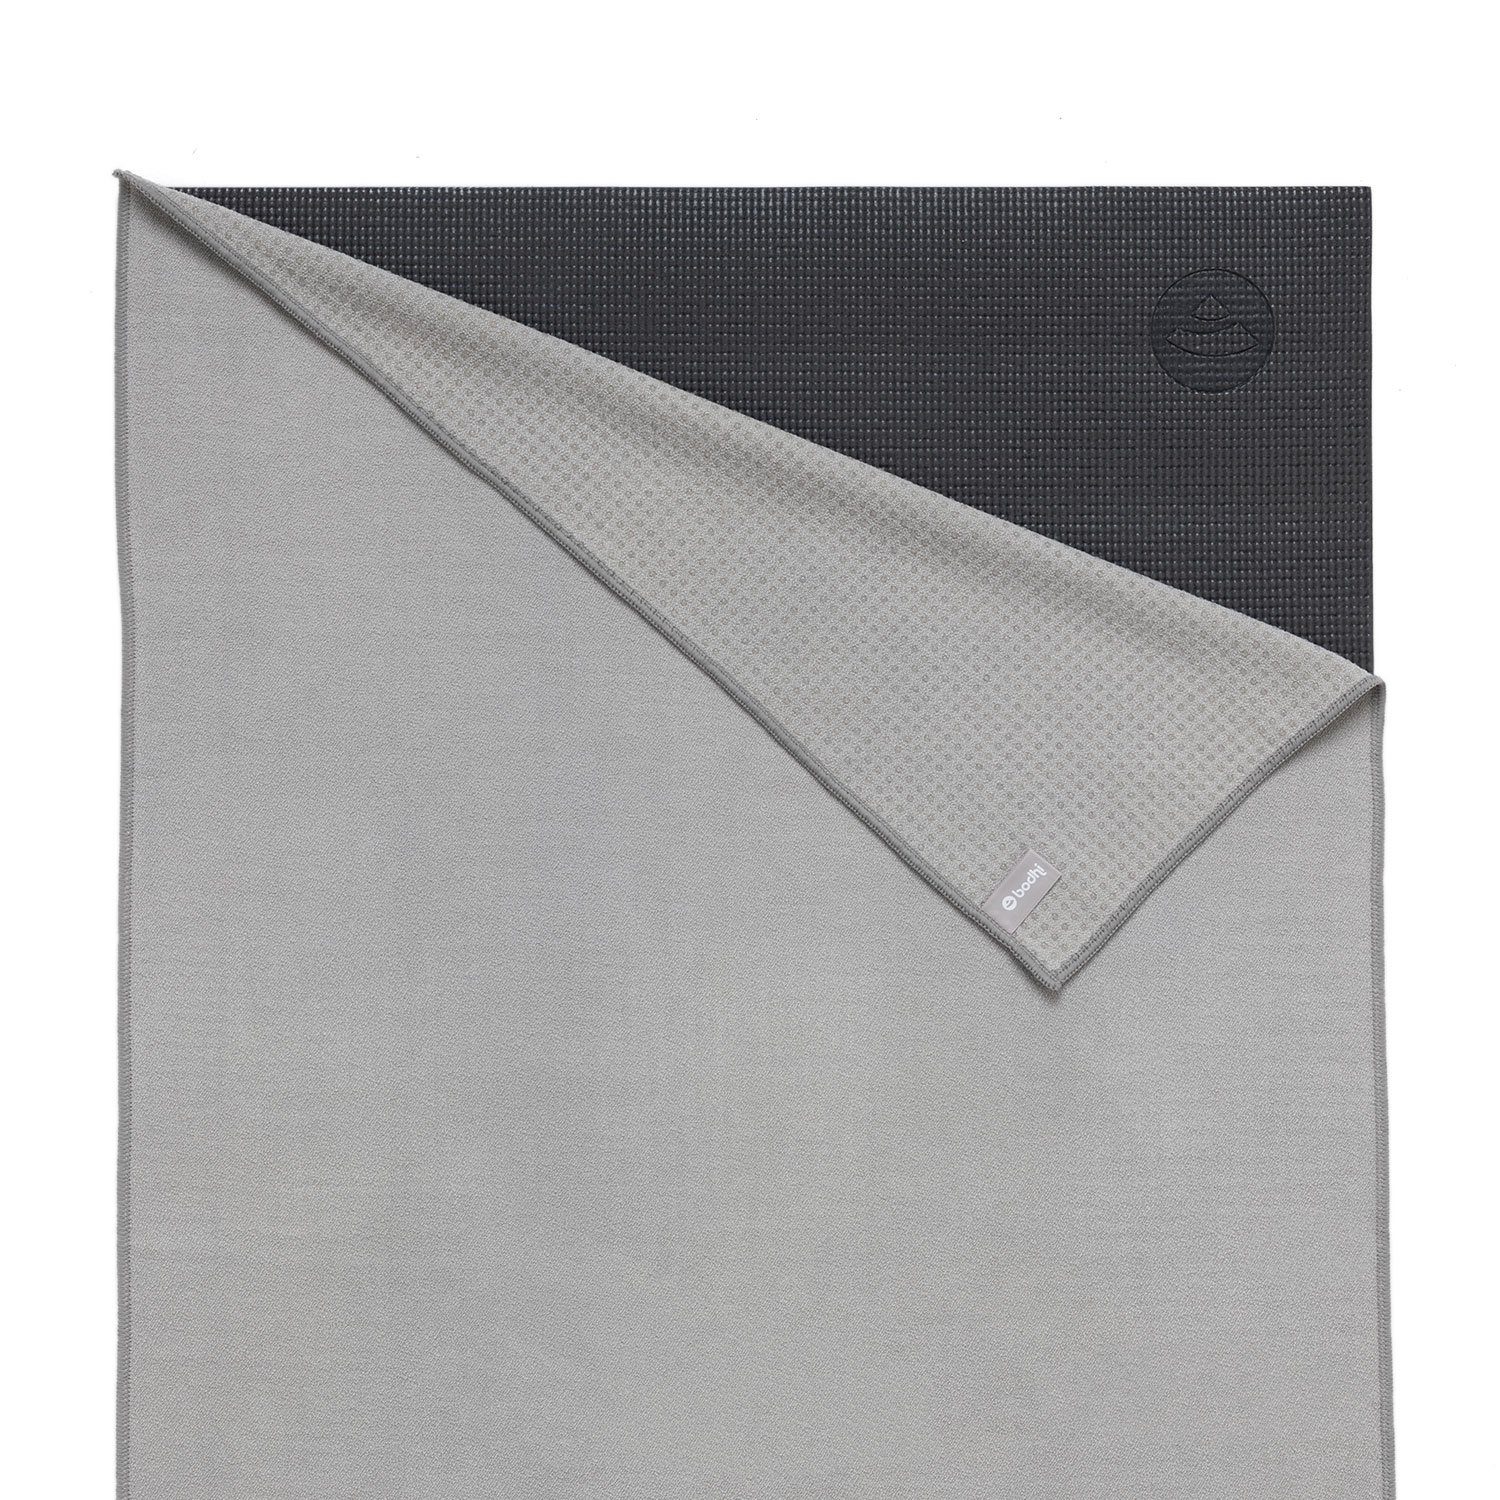 Towel bodhi Antirutschnoppen Yogatuch hellgrau mit Yoga GRIP ² Sporthandtuch